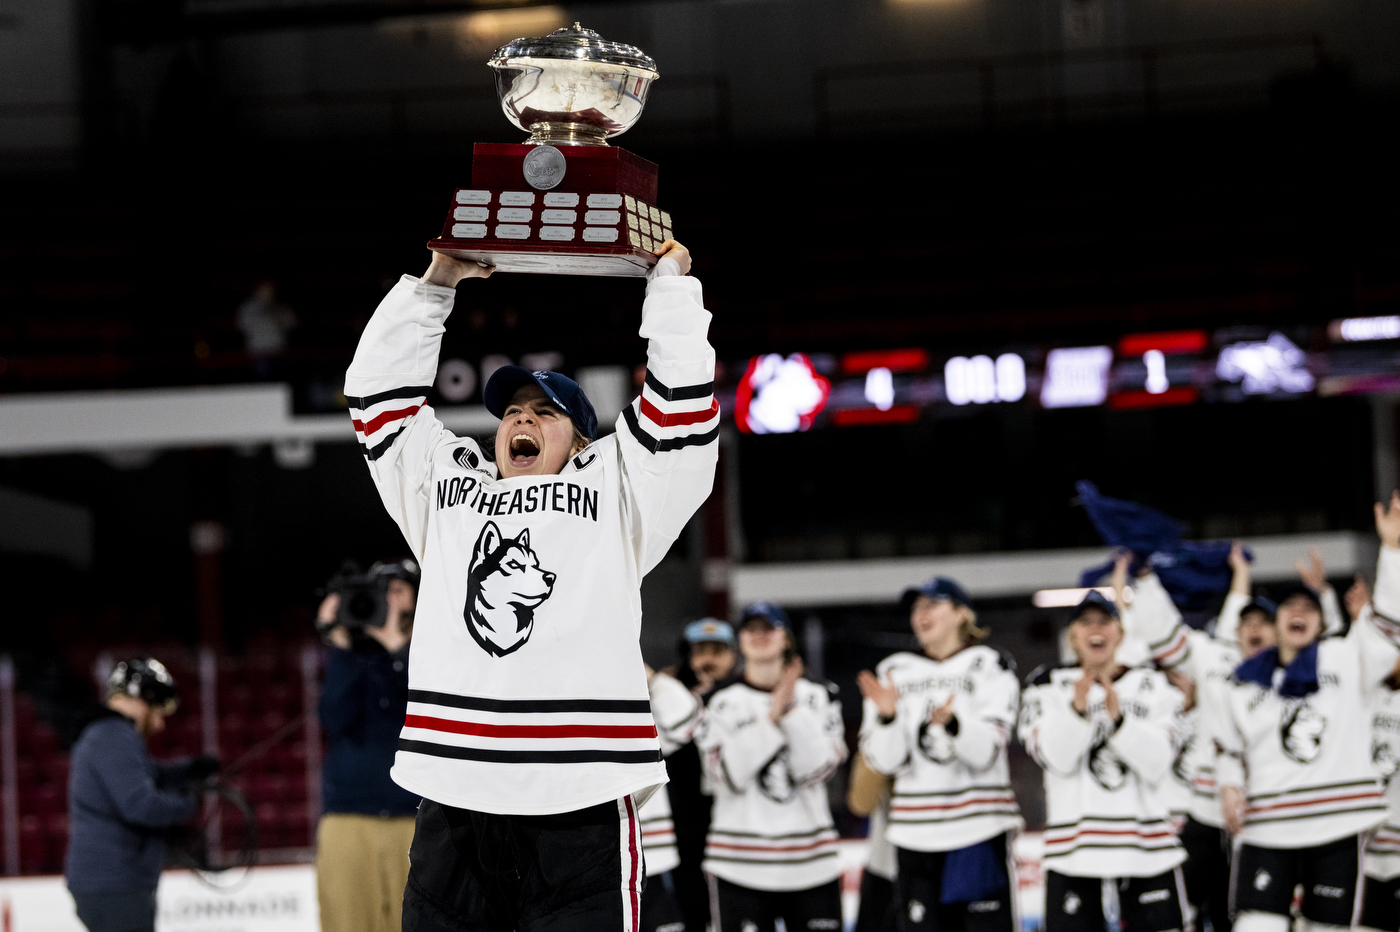 A women's hockey player lifts trophy overhead